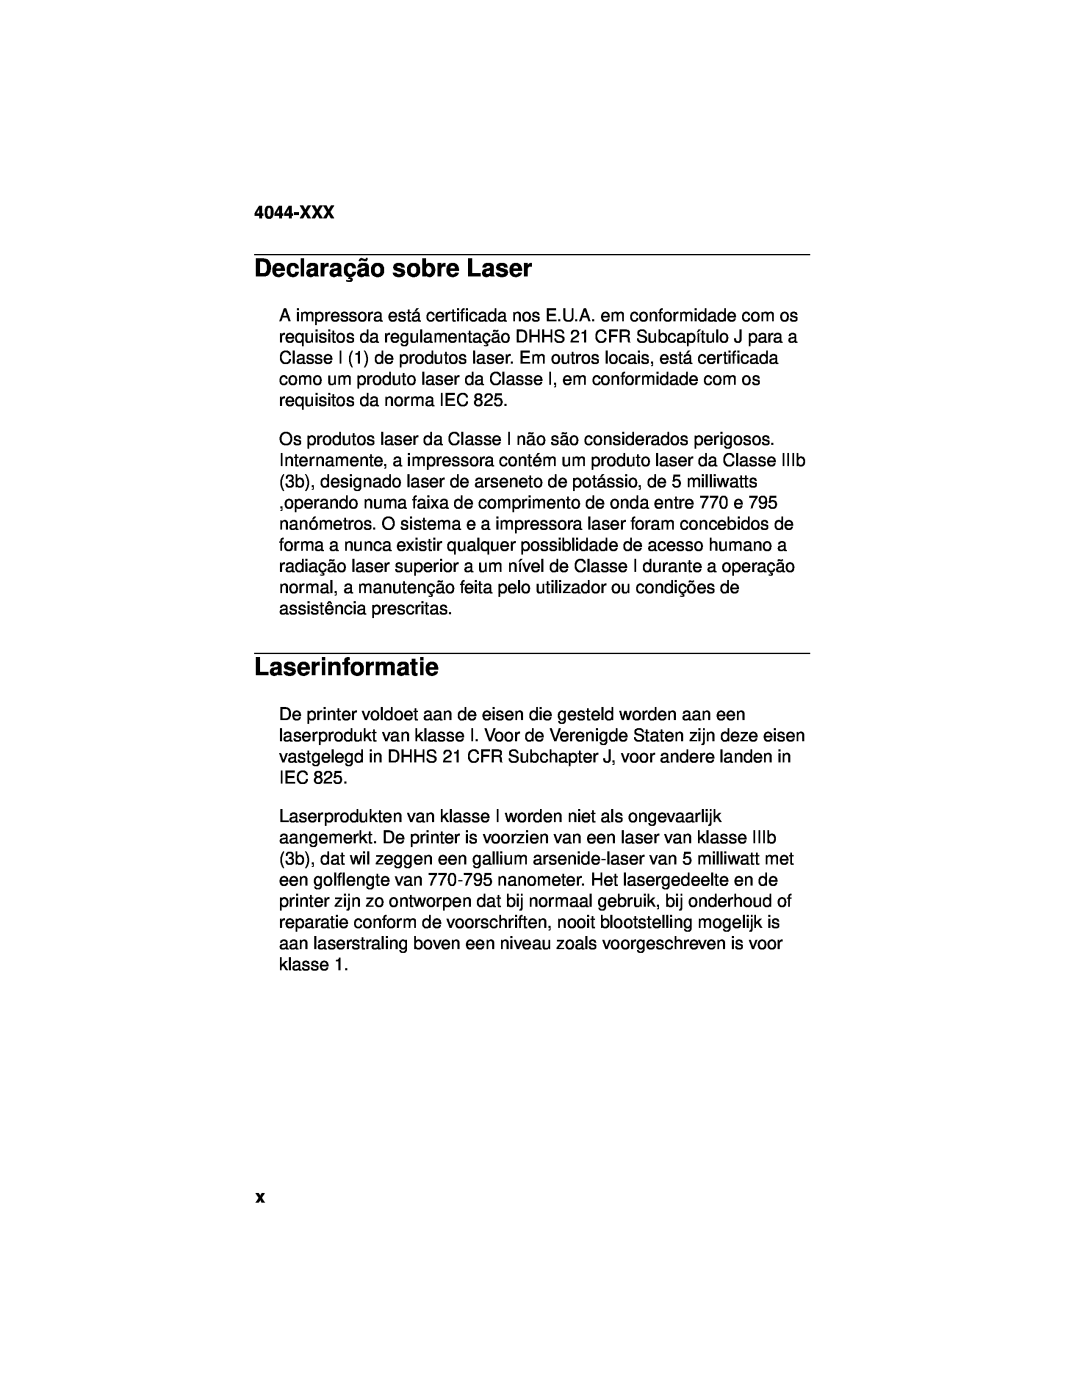 Lexmark 4044-XXX, E310 manual Declaraçã o sobre Laser, Laserinformatie 